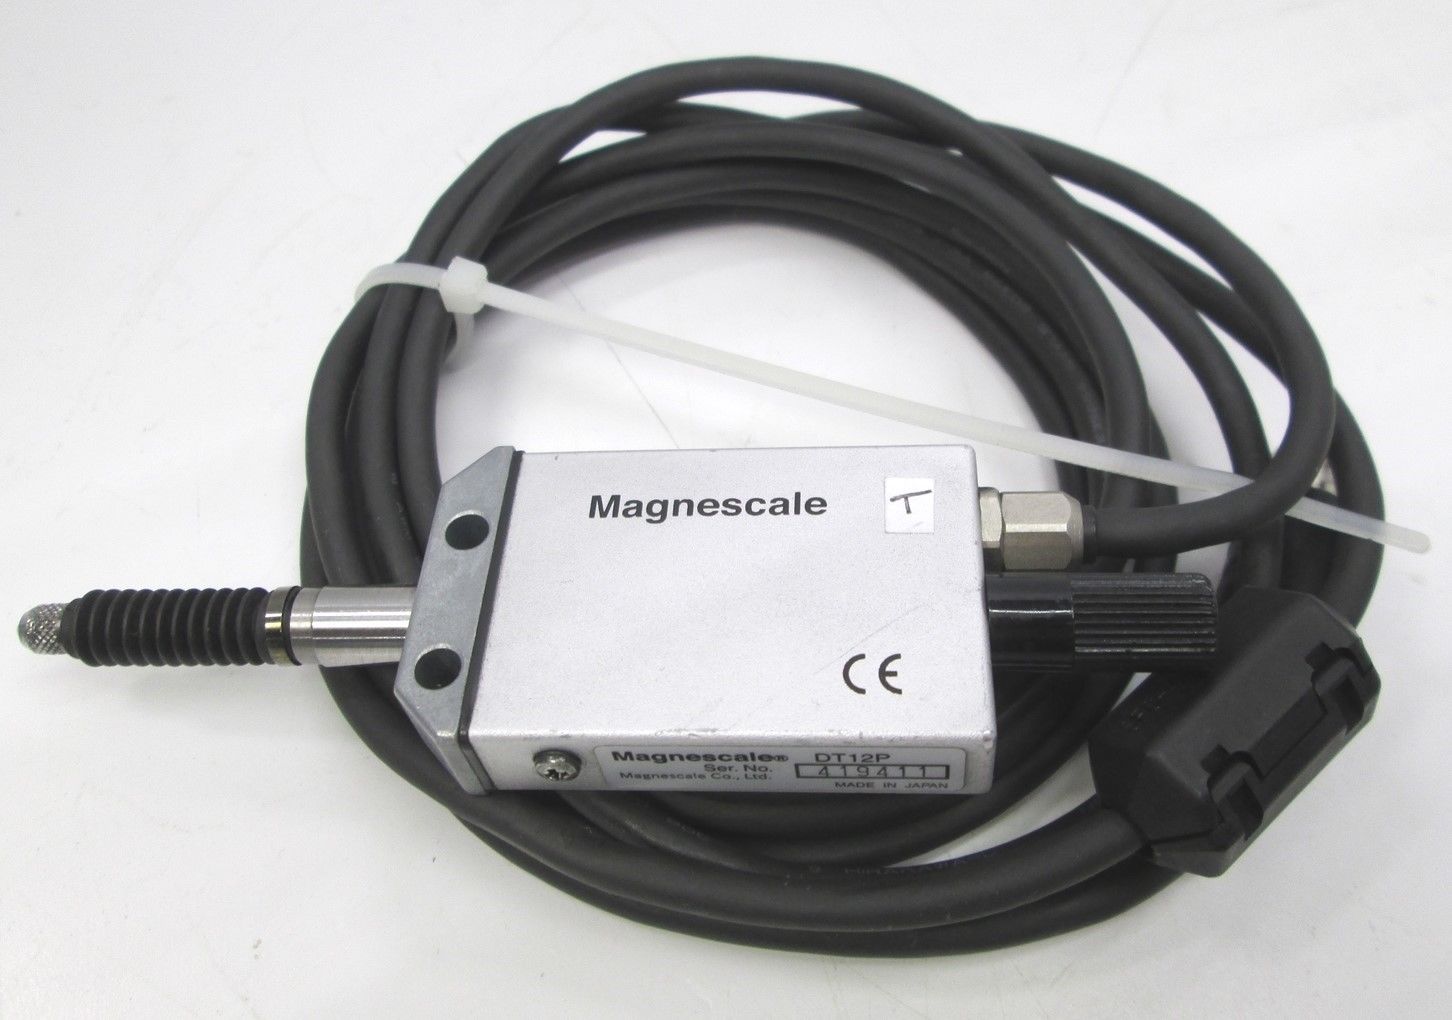 Magnescale / Sony DT12P Linear Transducer Sensor Gauge Probe Magnetic 12mm DIAGNOSTIC ULTRASOUND MACHINES FOR SALE